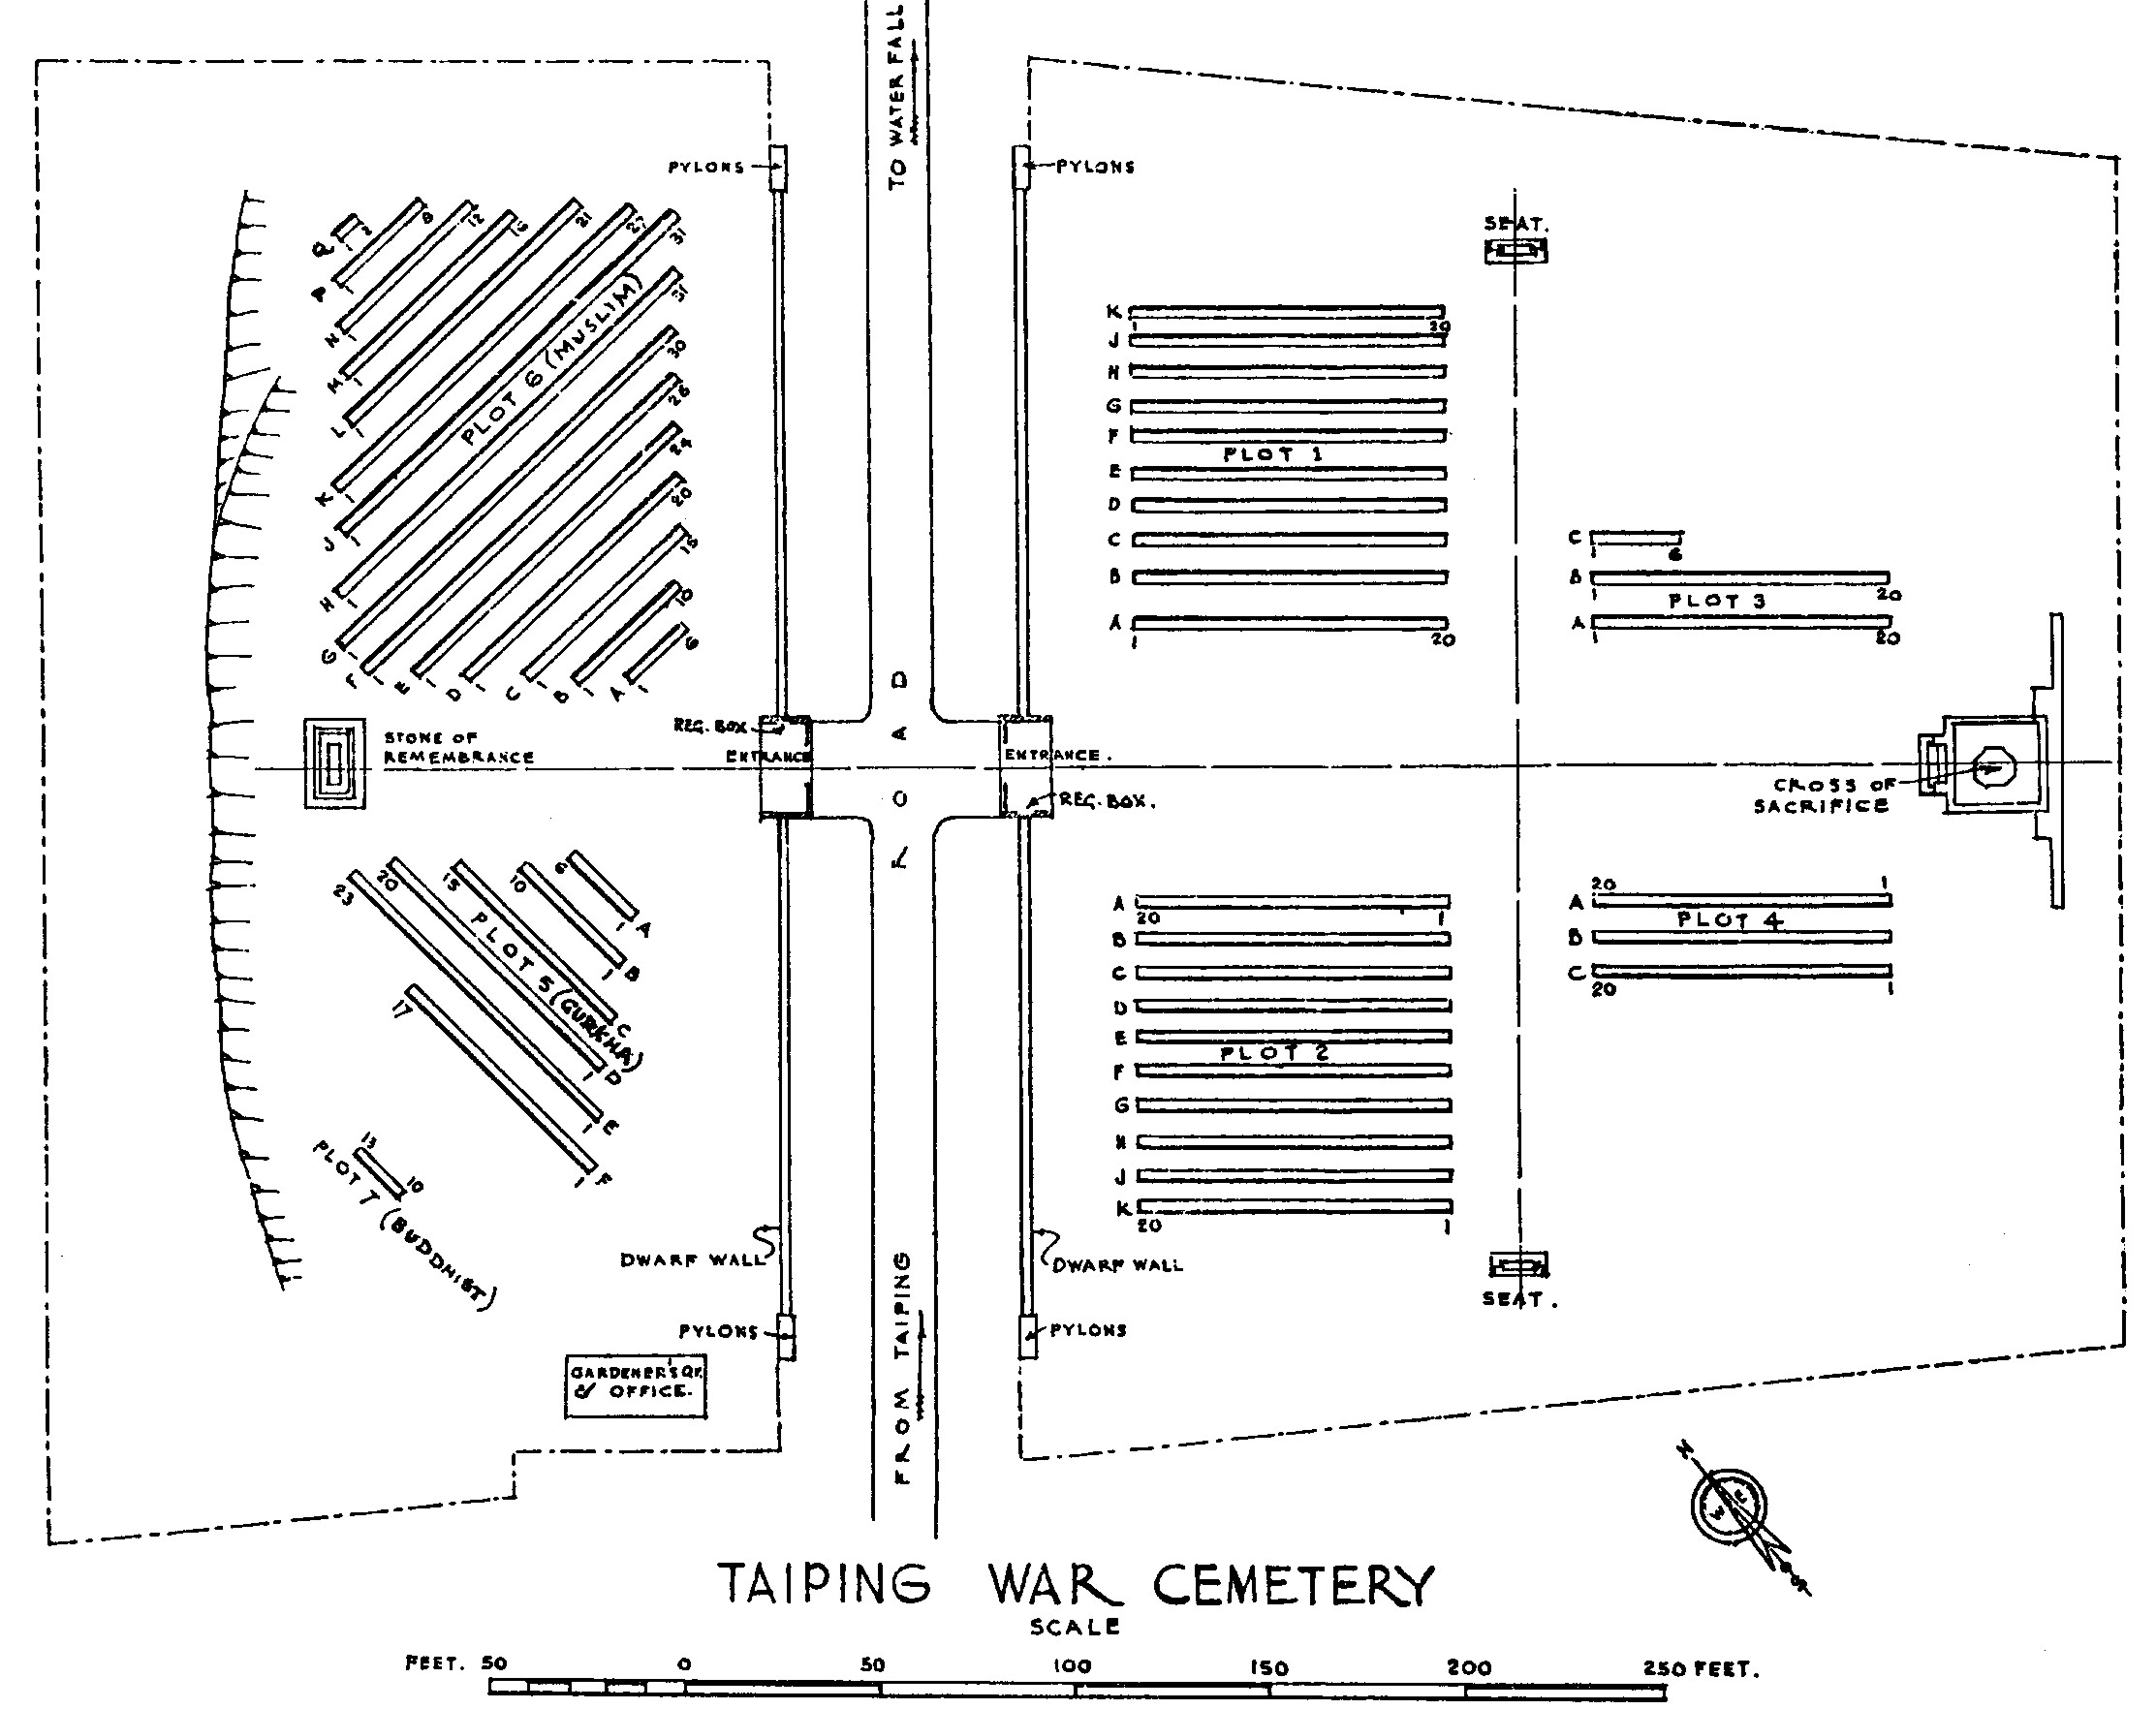 Taiping War Cemetery Plan